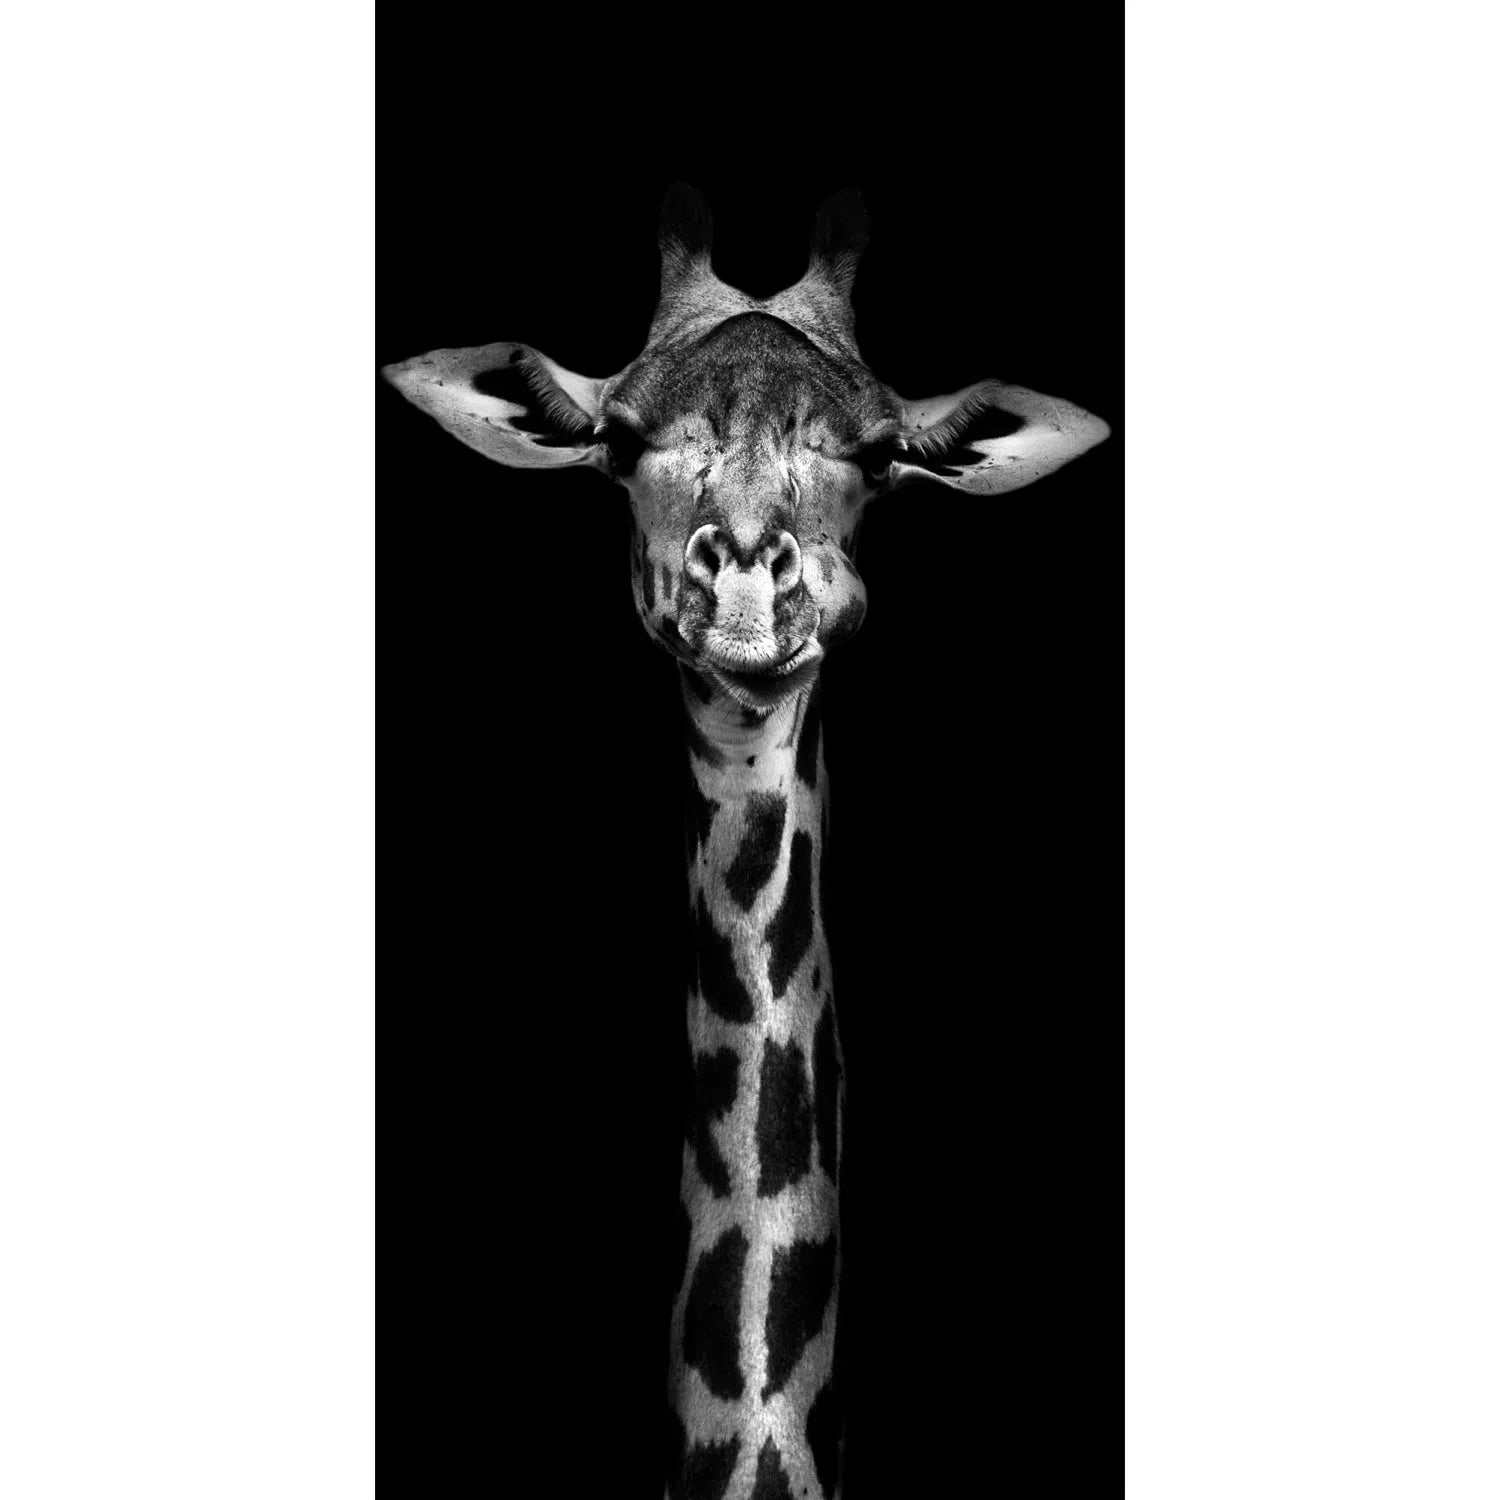 La girafe toute en hauteur-Imagesdartistes